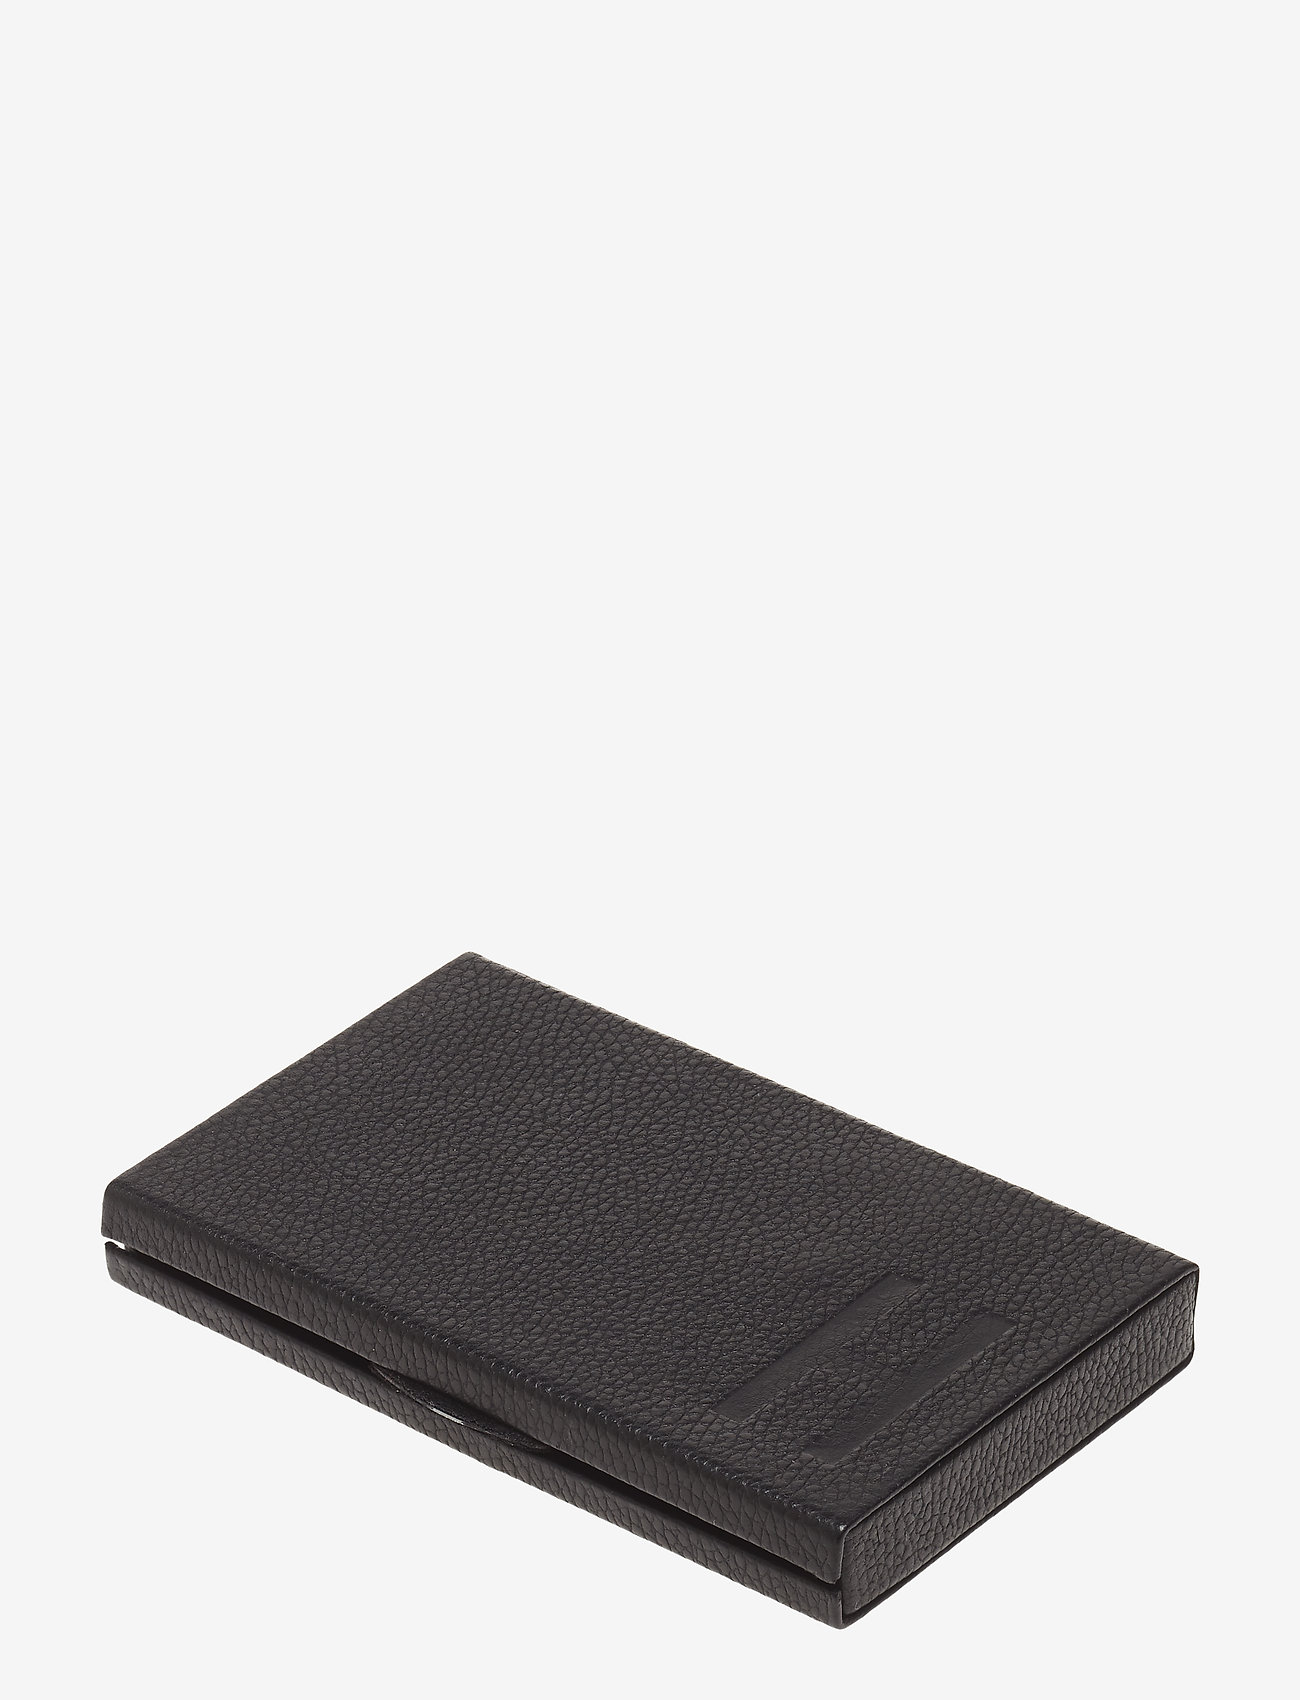 Design Letters - Personal Card holder - käekotid - black - 0